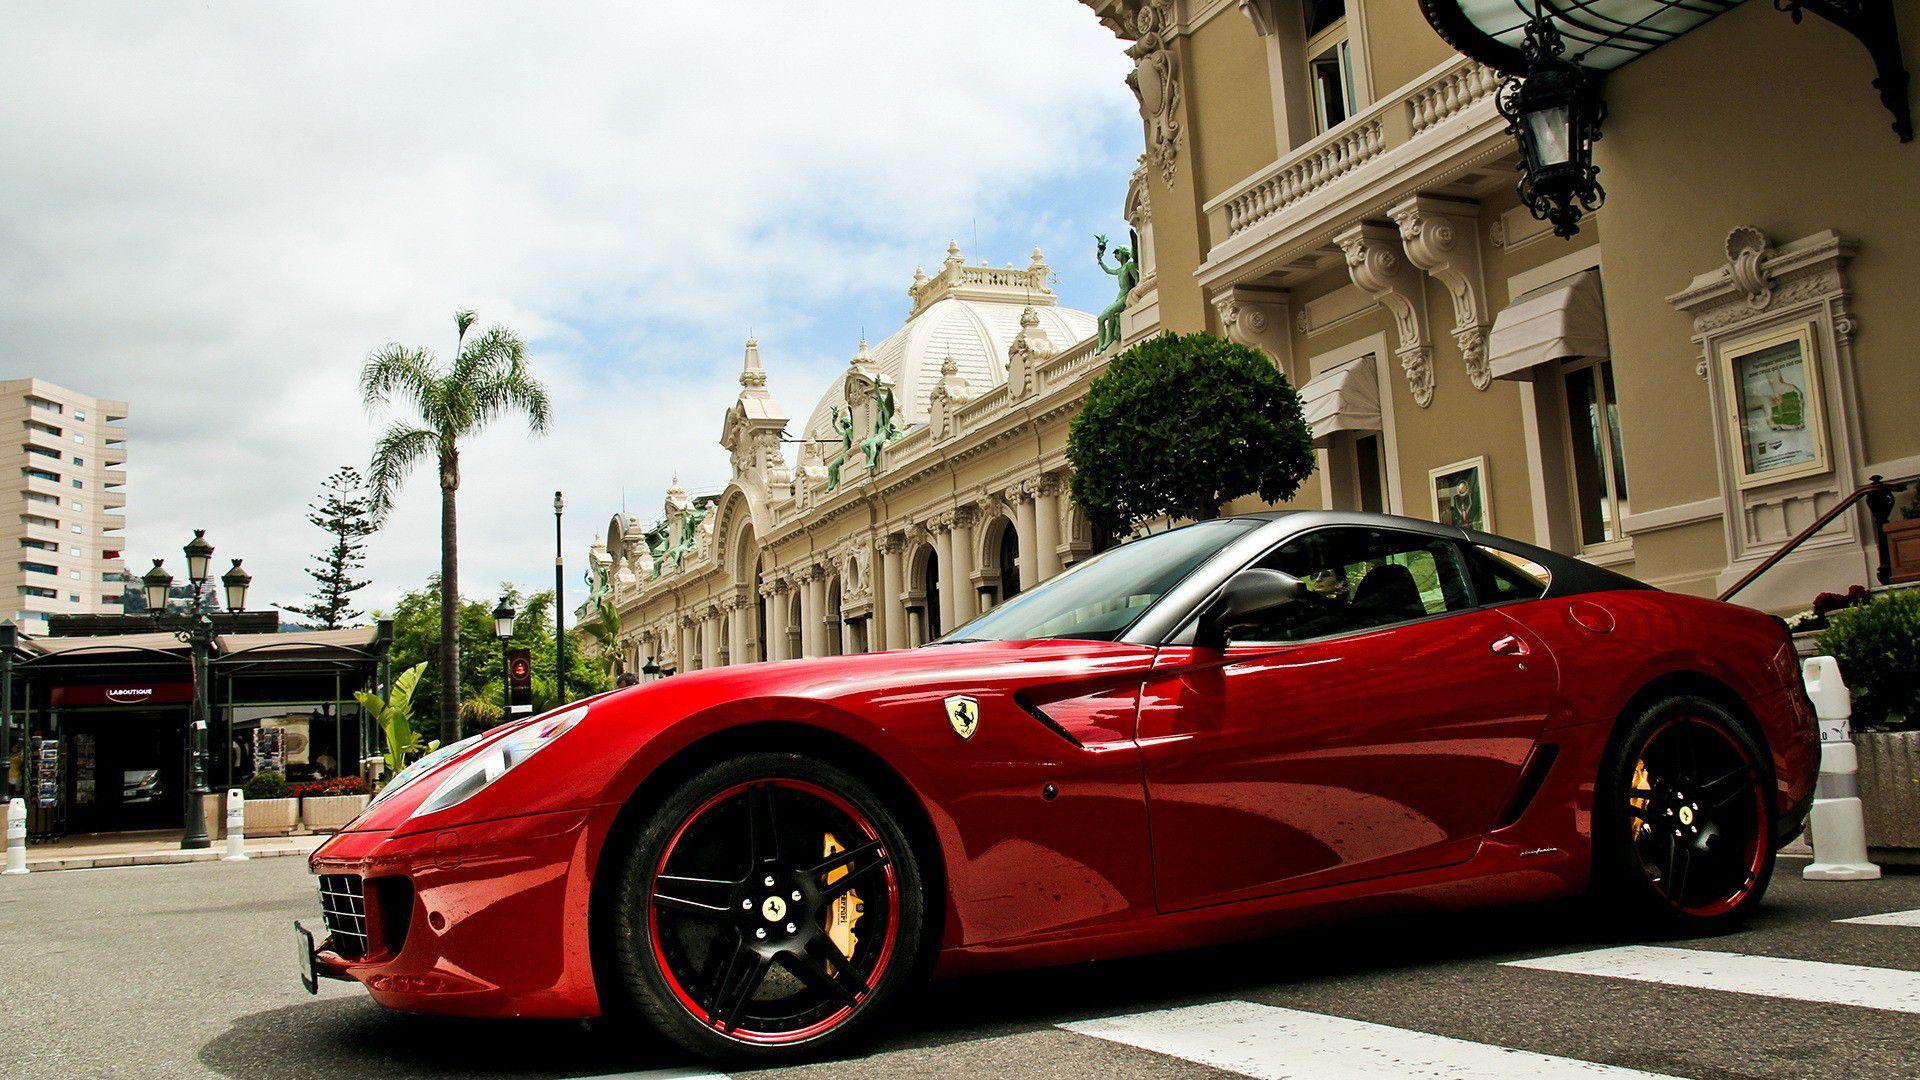 Wallpaper Ferrari HD